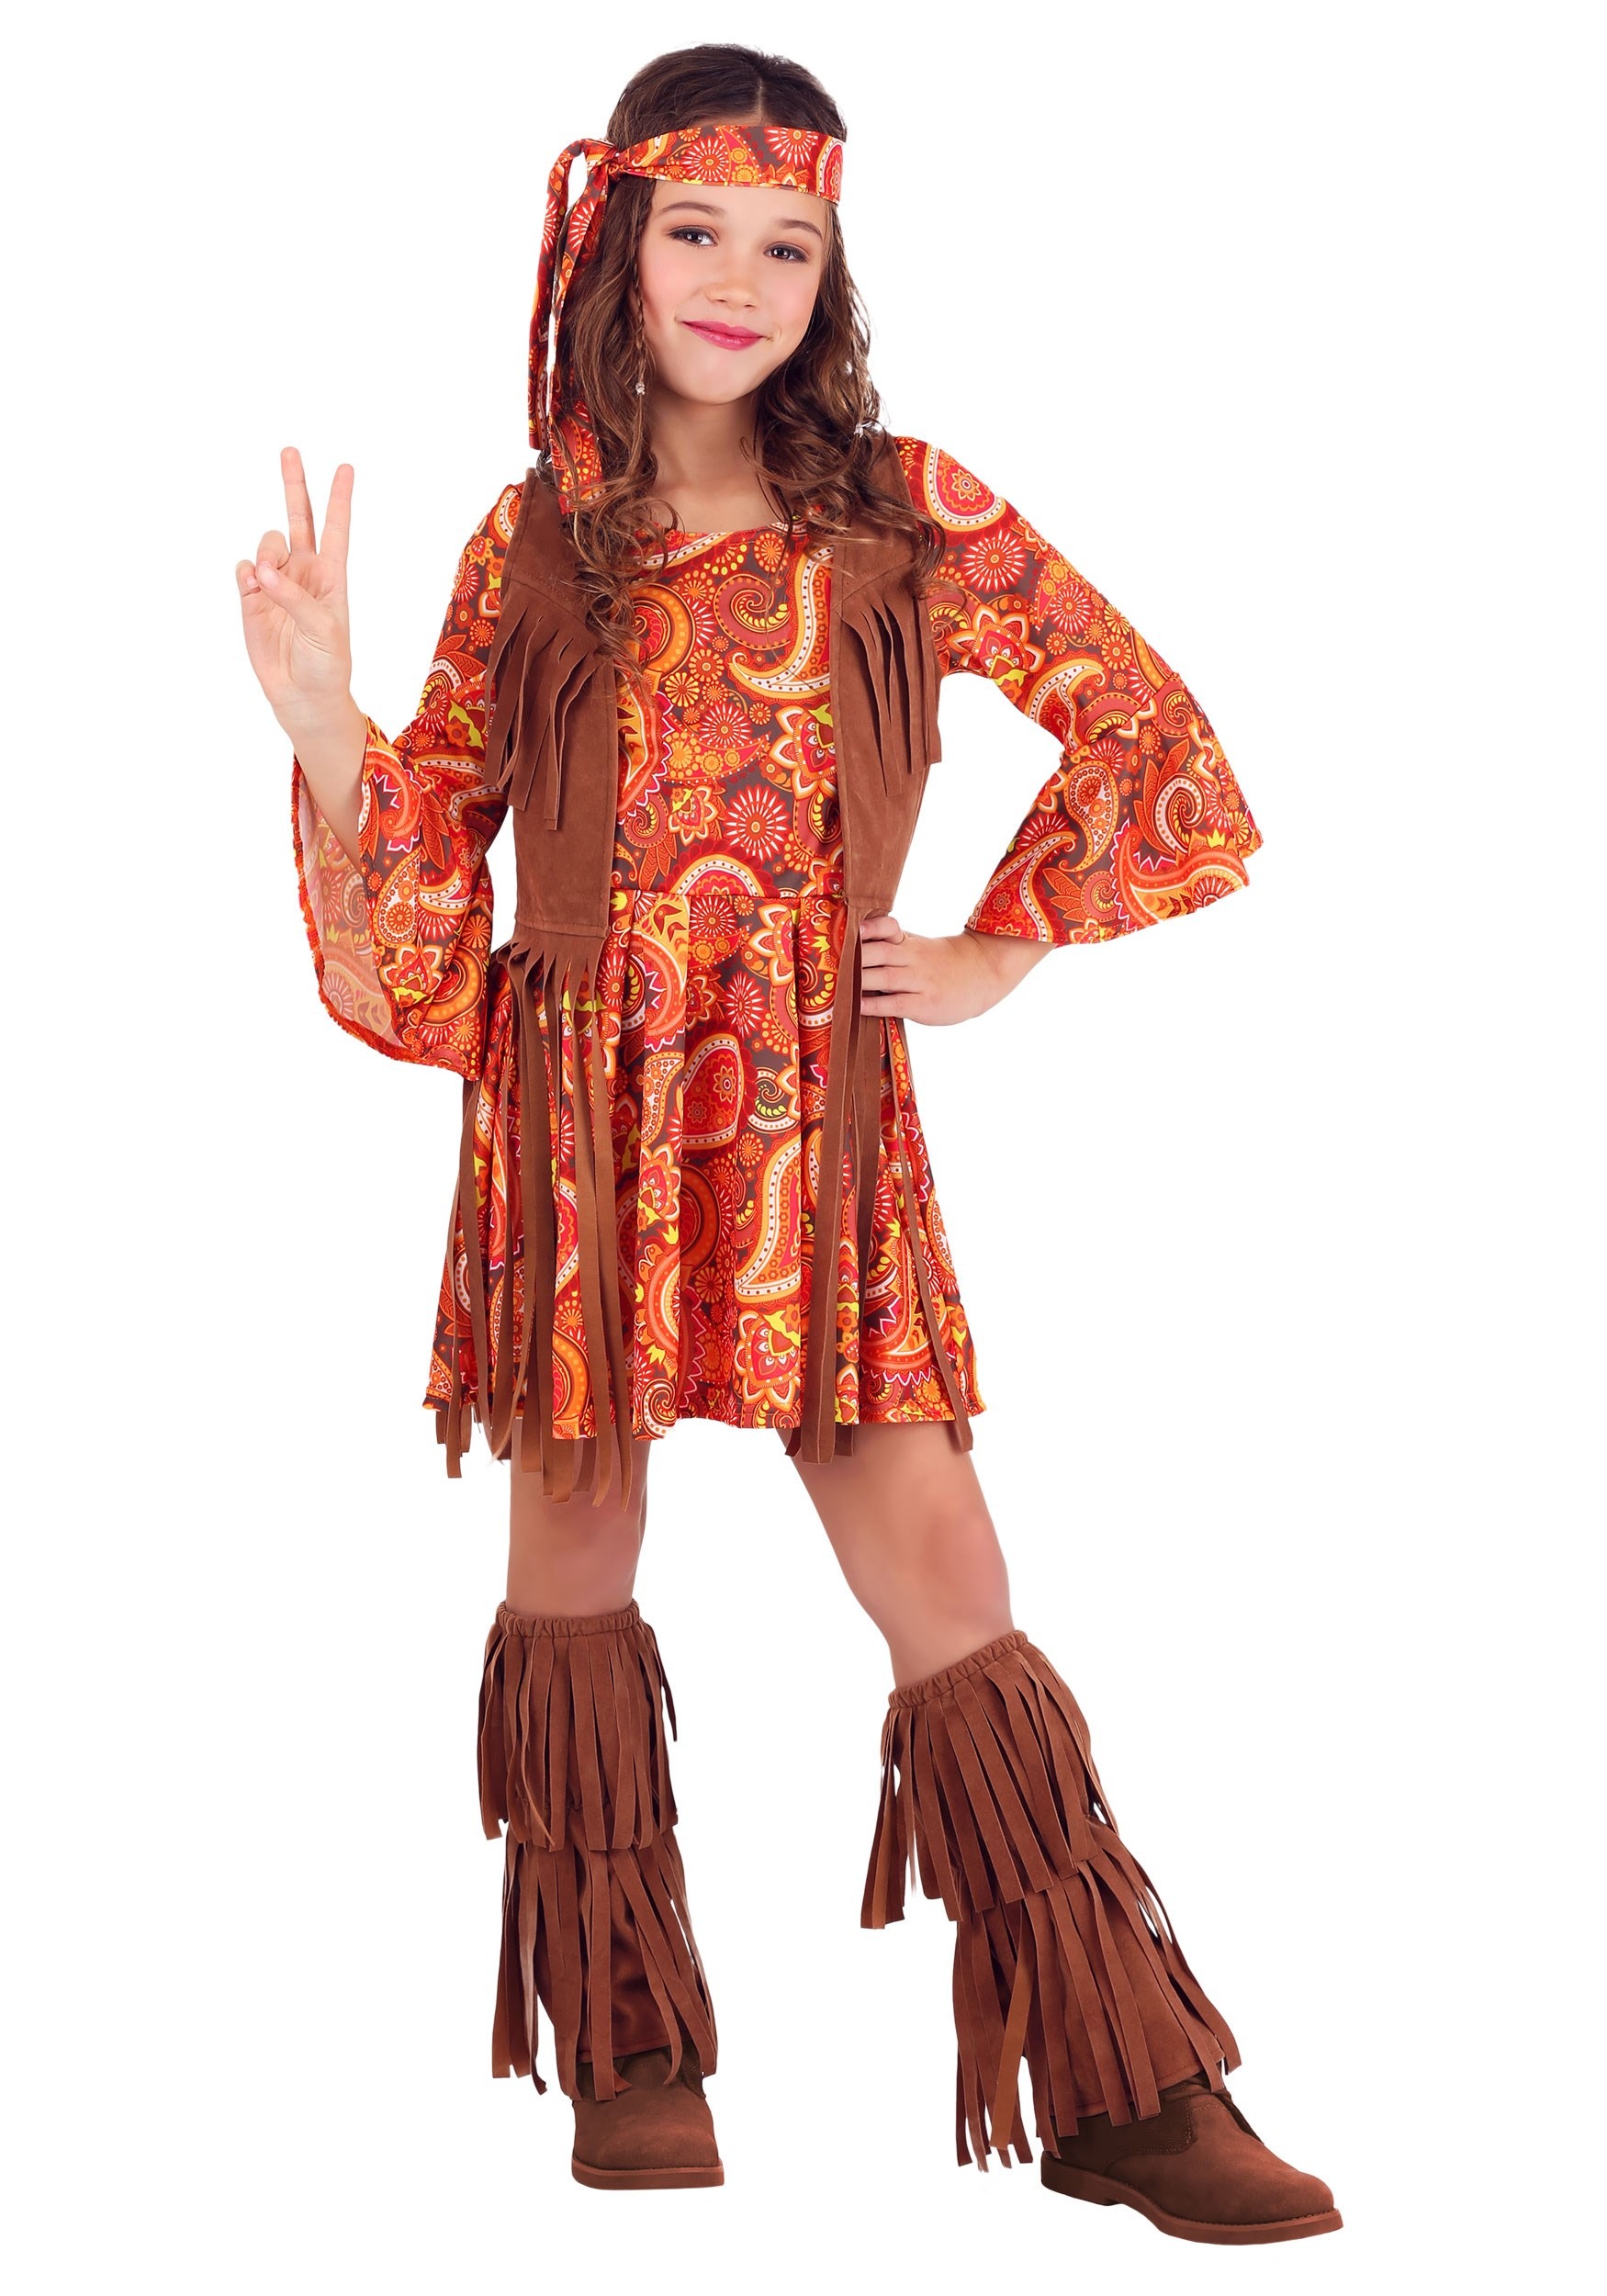 Photos - Fancy Dress FUN Costumes Girl's Fringe Hippie Costume Yellow/Orange FUN0364CH